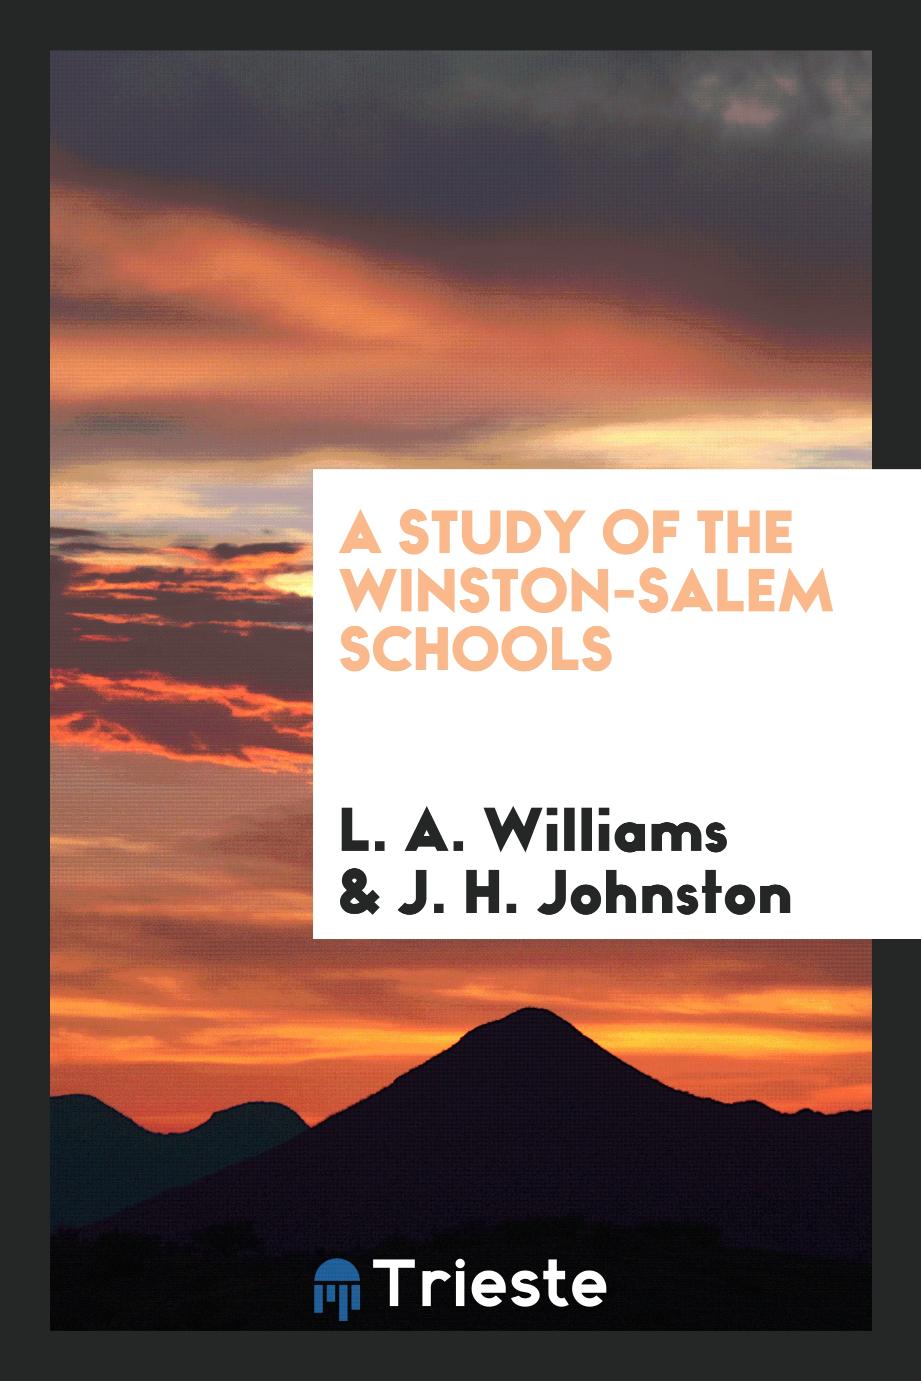 L. A. Williams, J. H. Johnston - A Study of the Winston-Salem Schools